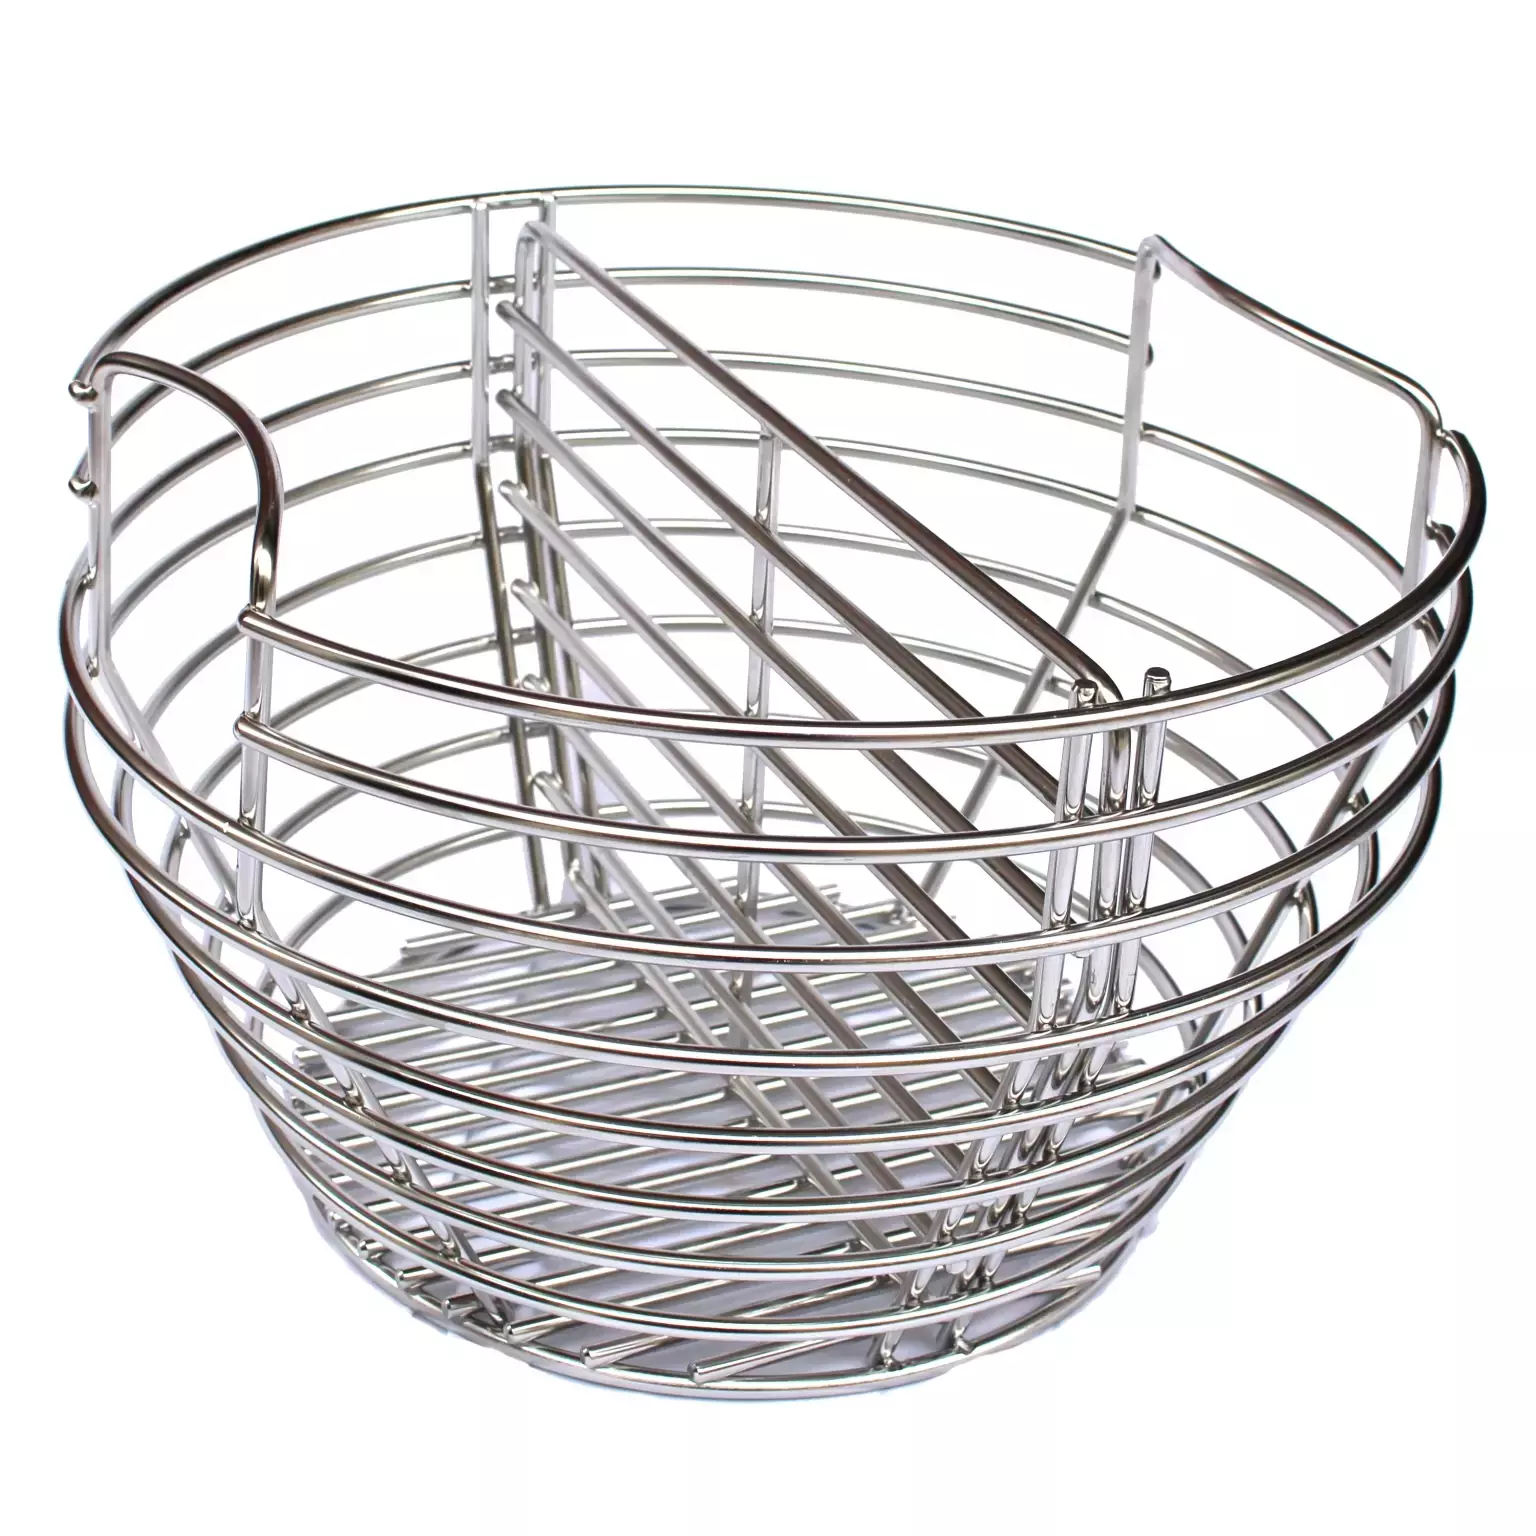 Charcoal basket | Large | The bastard